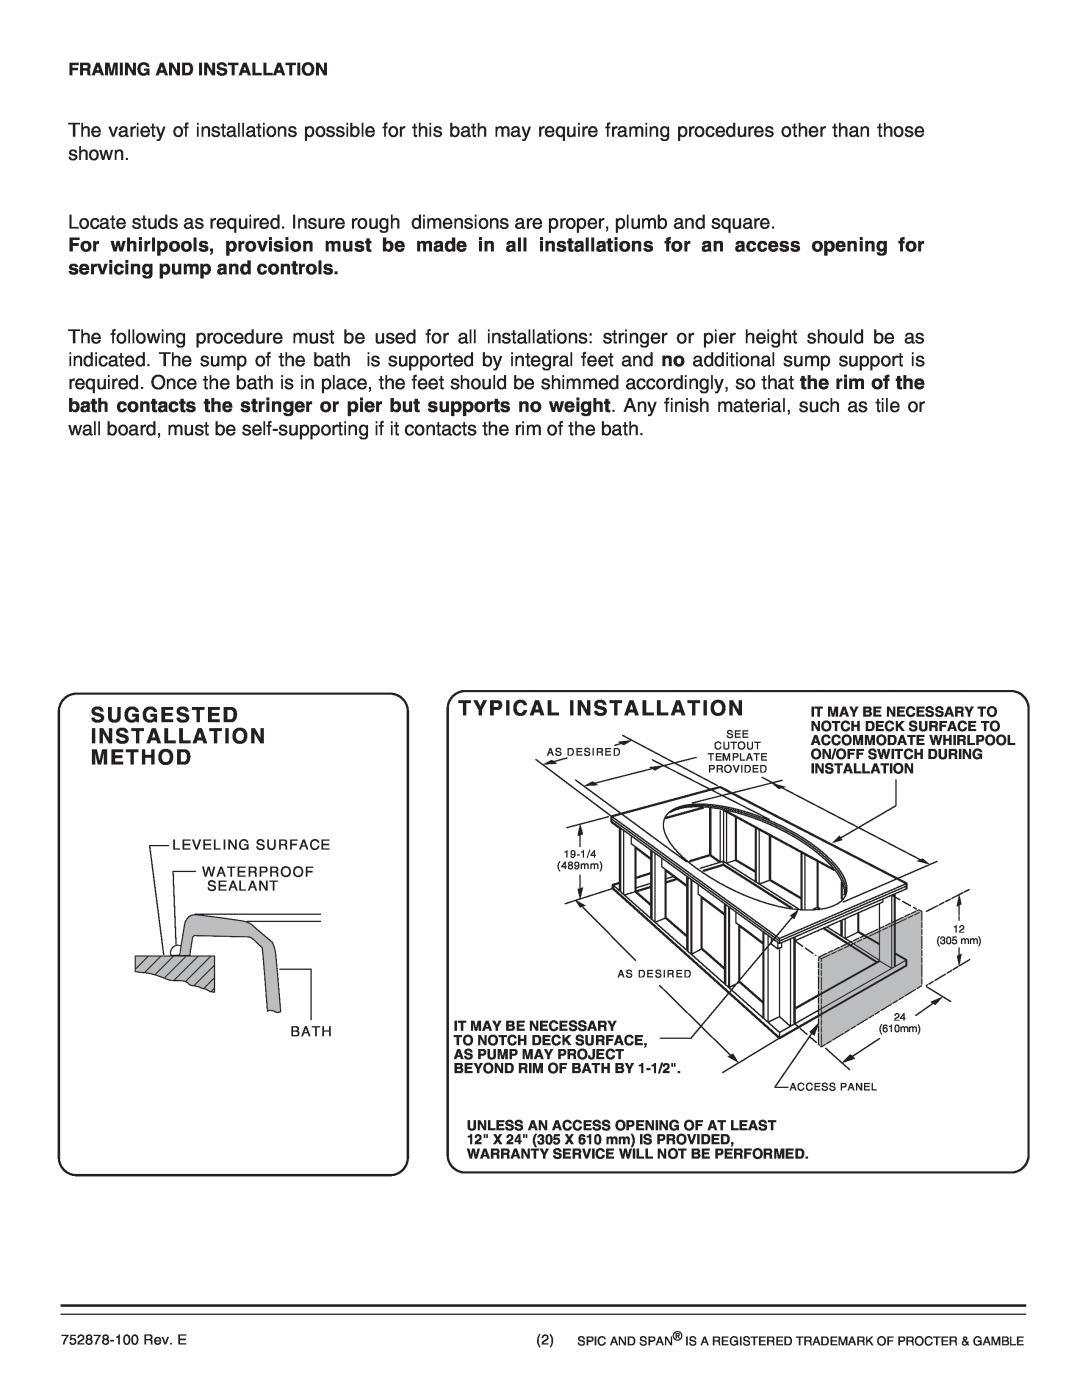 American Standard 2903.XXXW Suggested Installation Method, Typical Installation, Framing And Installation 